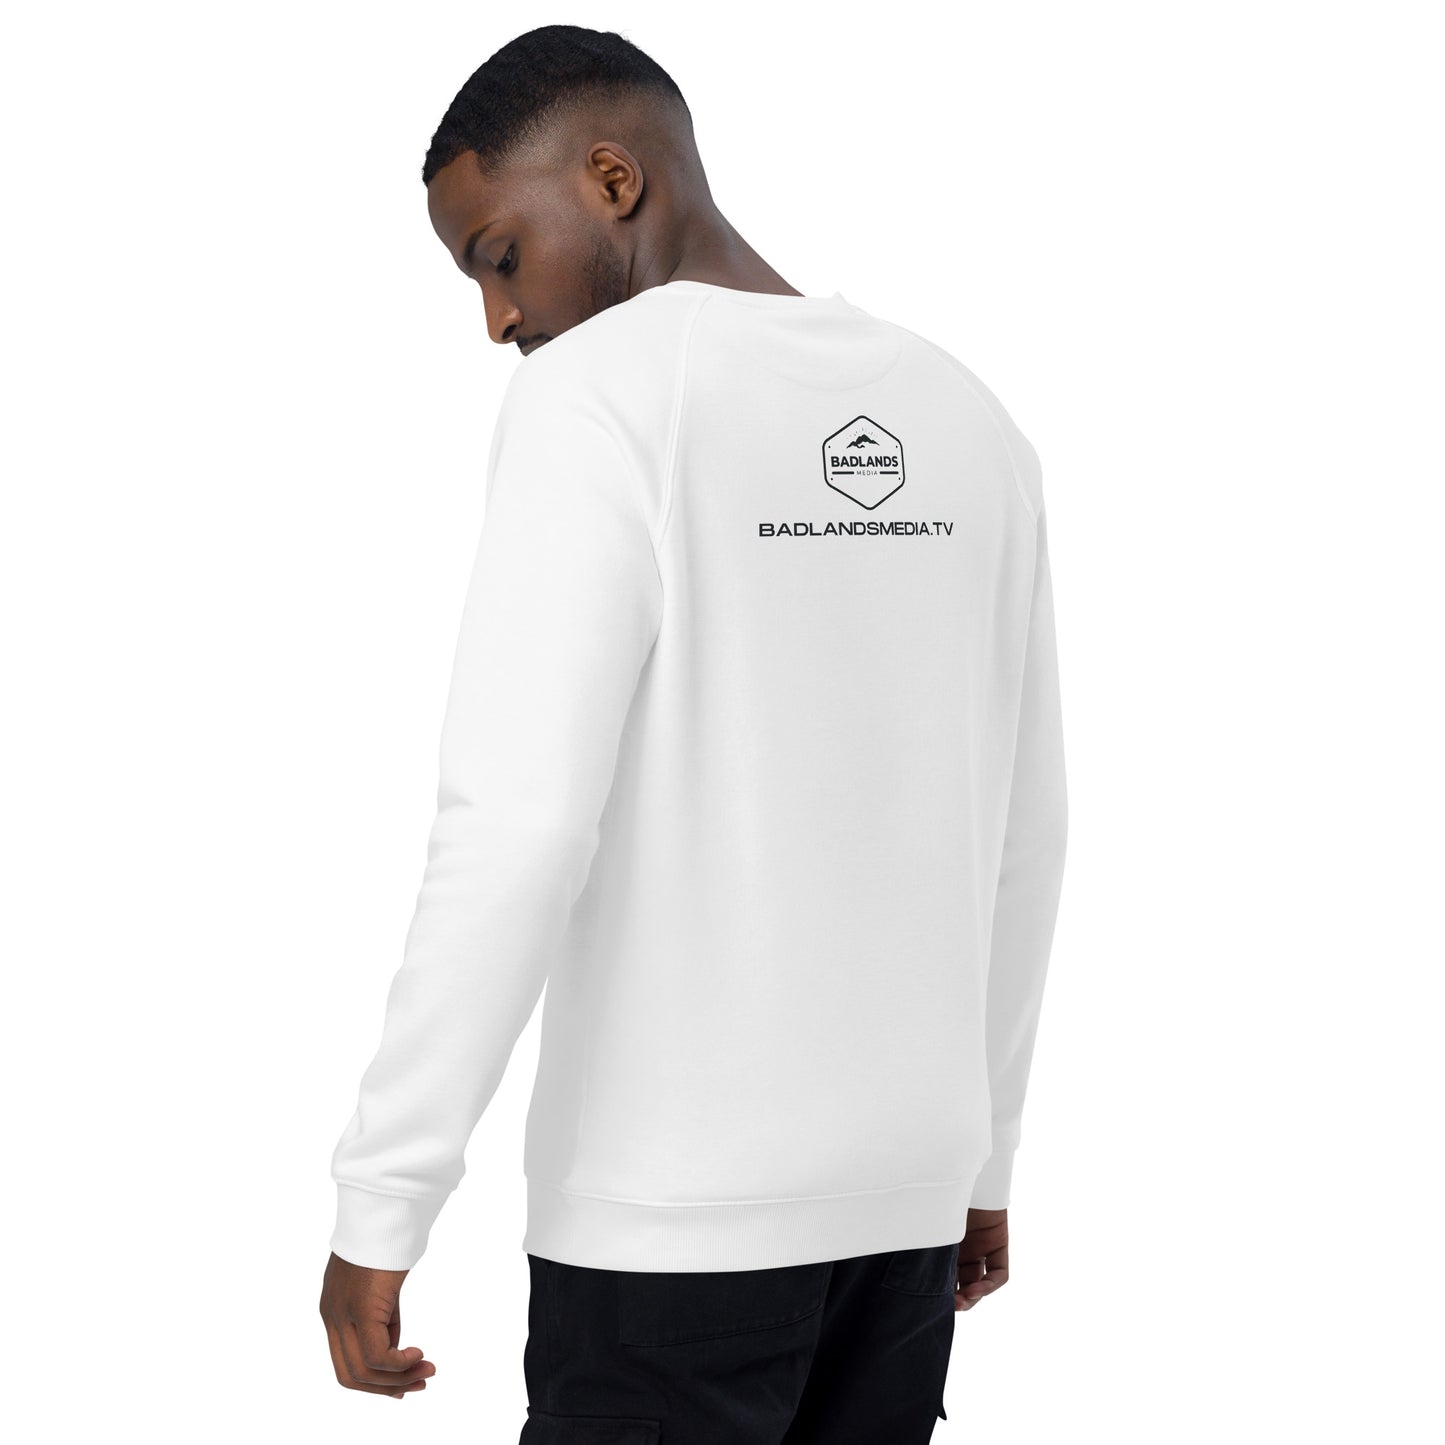 The Liberty Den Unisex organic raglan sweatshirt (white)